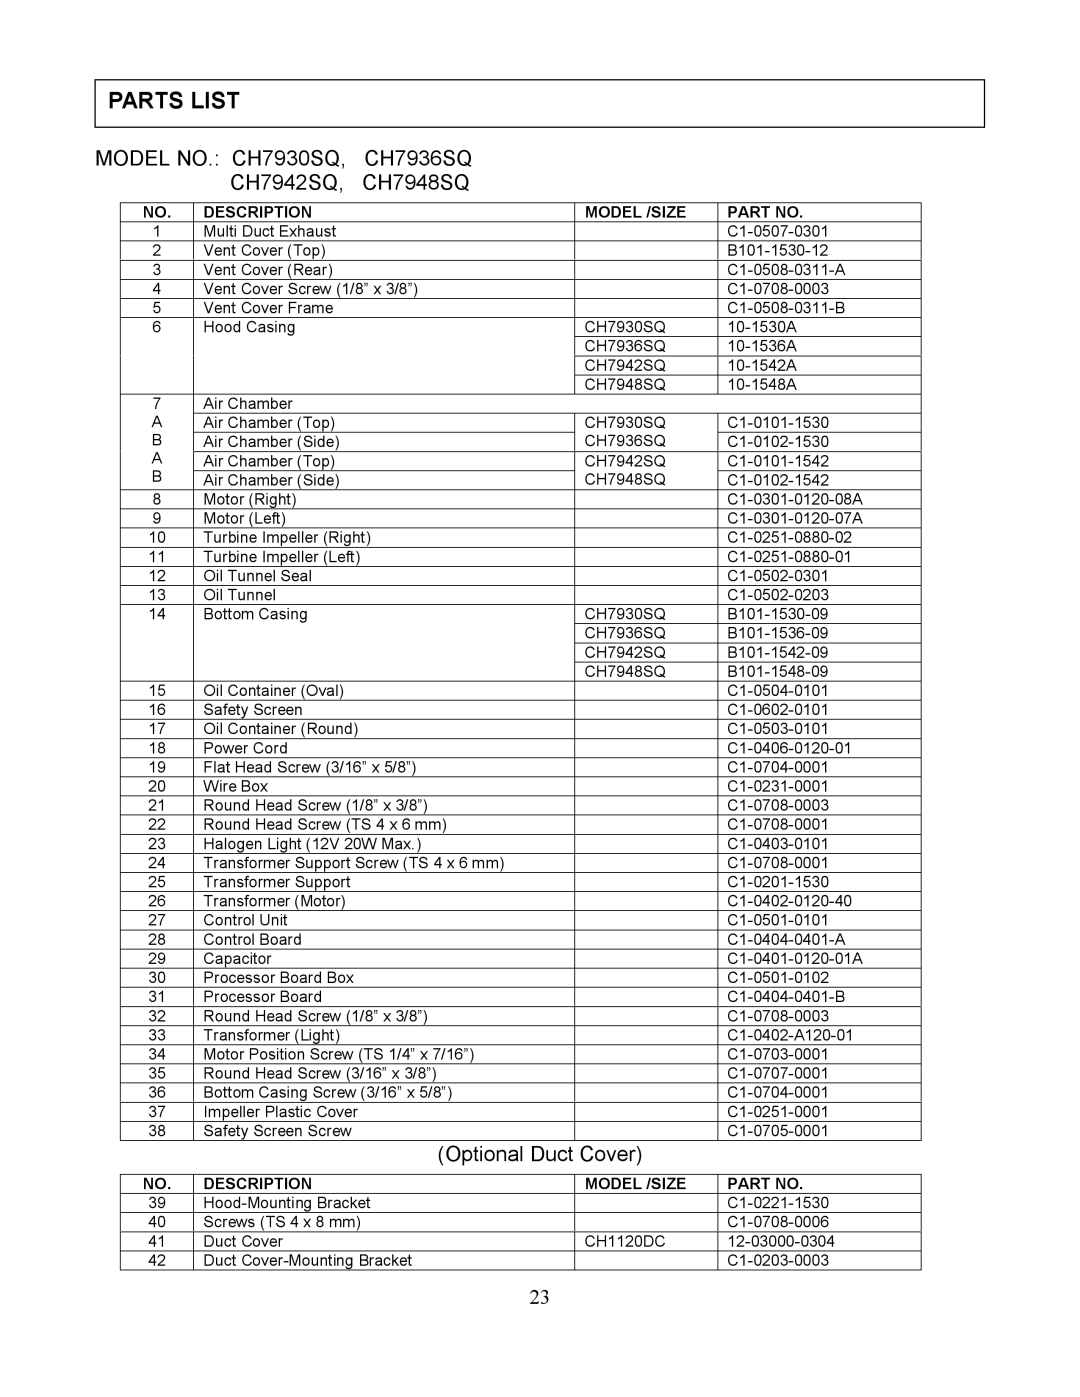 Kobe Range Hoods manual Parts List, Model NO. CH7930SQ, CH7936SQ CH7942SQ CH7948SQ, Optional Duct Cover 